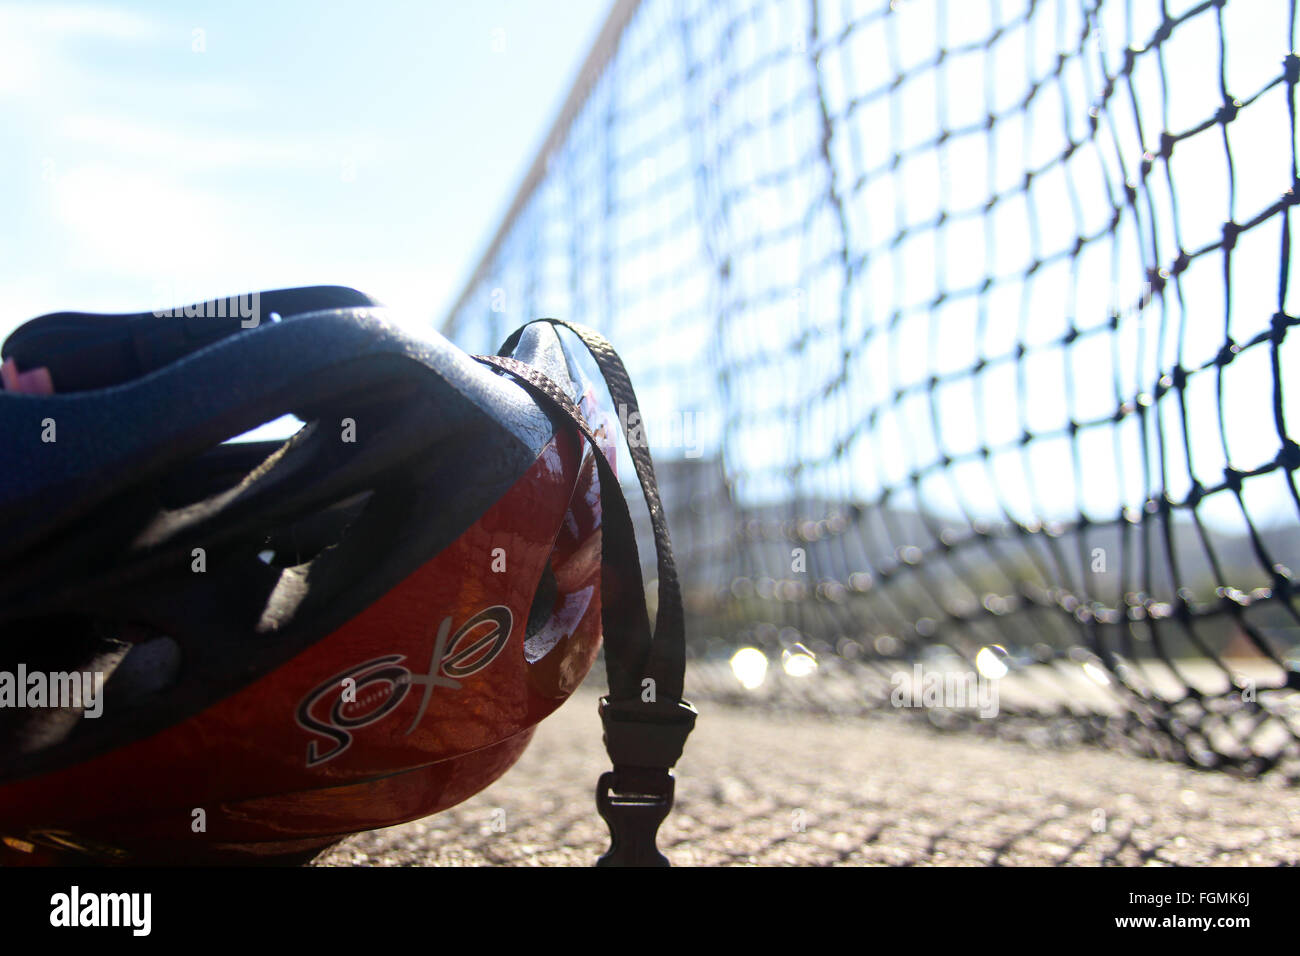 cycle helmet on tennis court Stock Photo